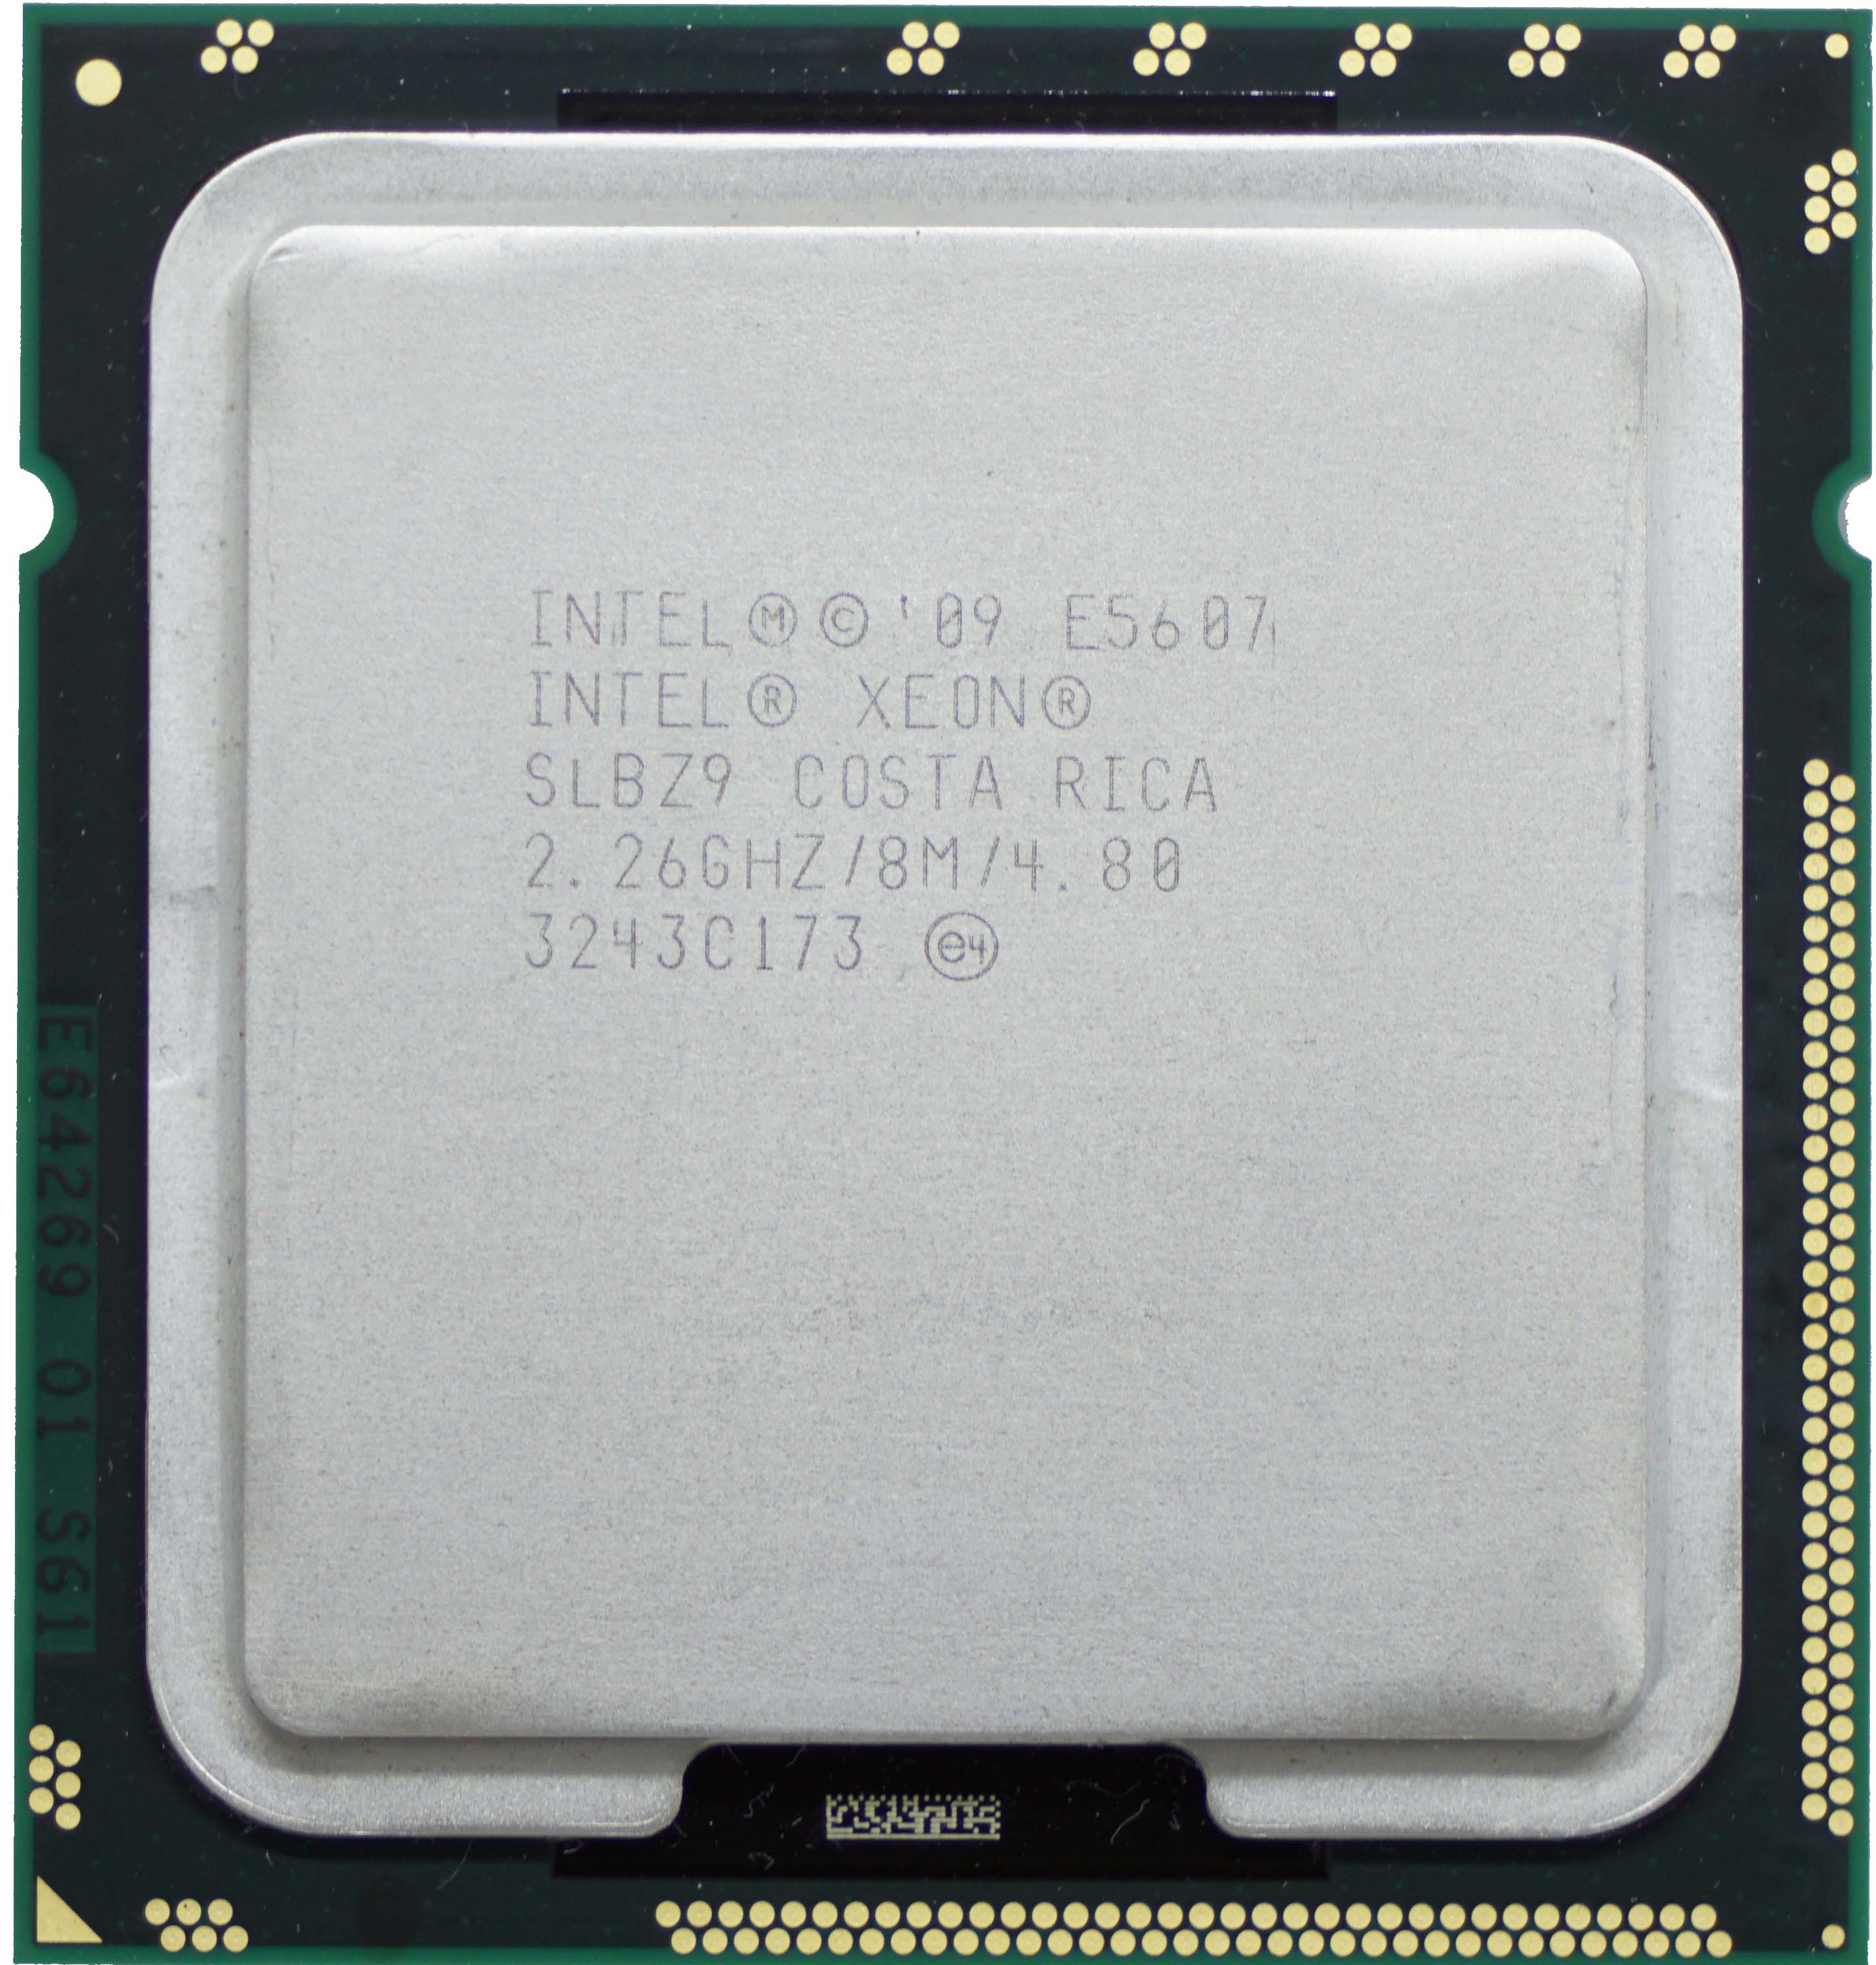 Intel Xeon E5607 (SLBZ9) 2.26Ghz Quad (4) Core LGA1366 80W CPU